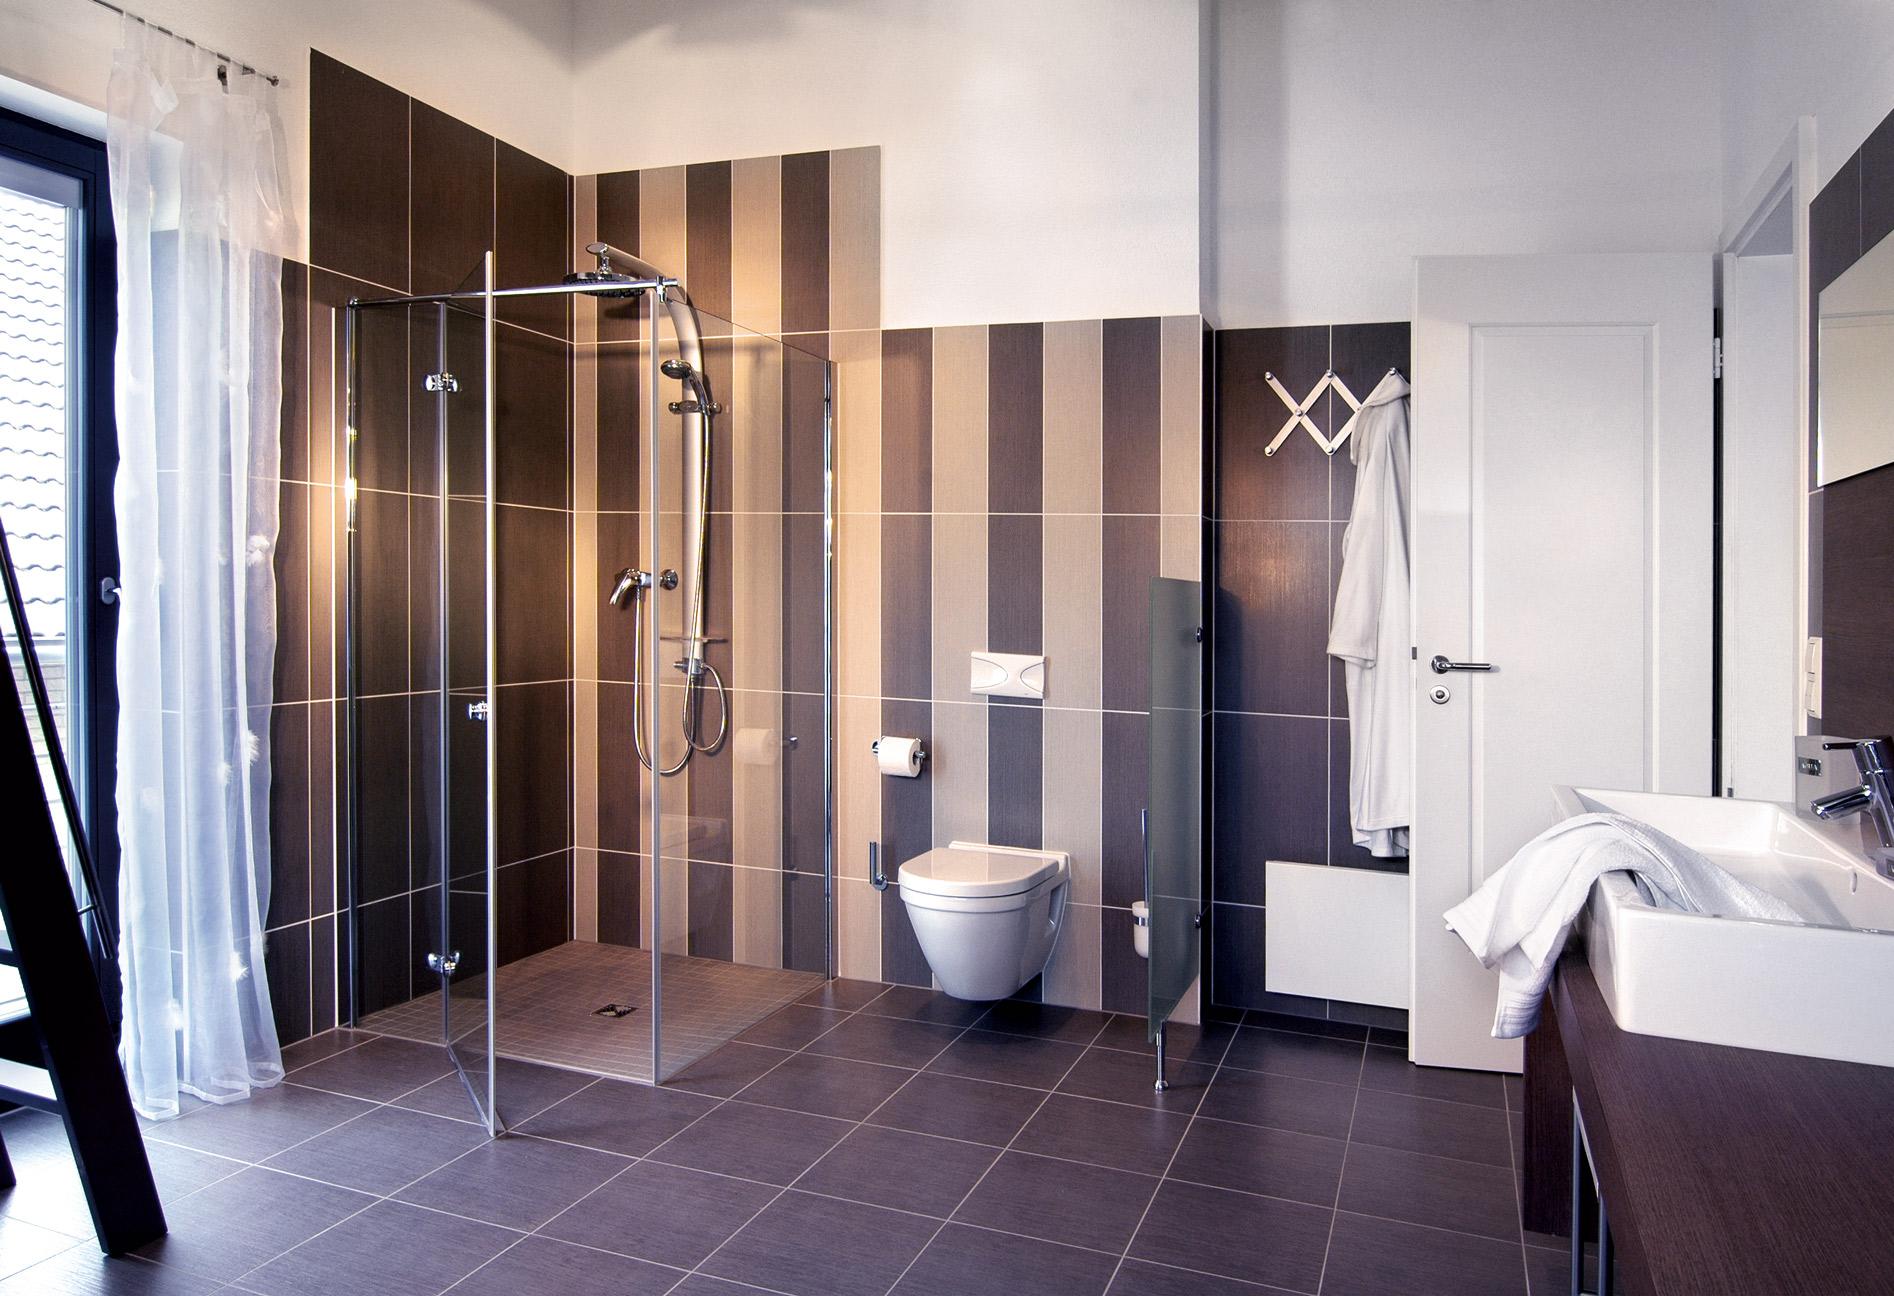 Large bathroom with dark tiles